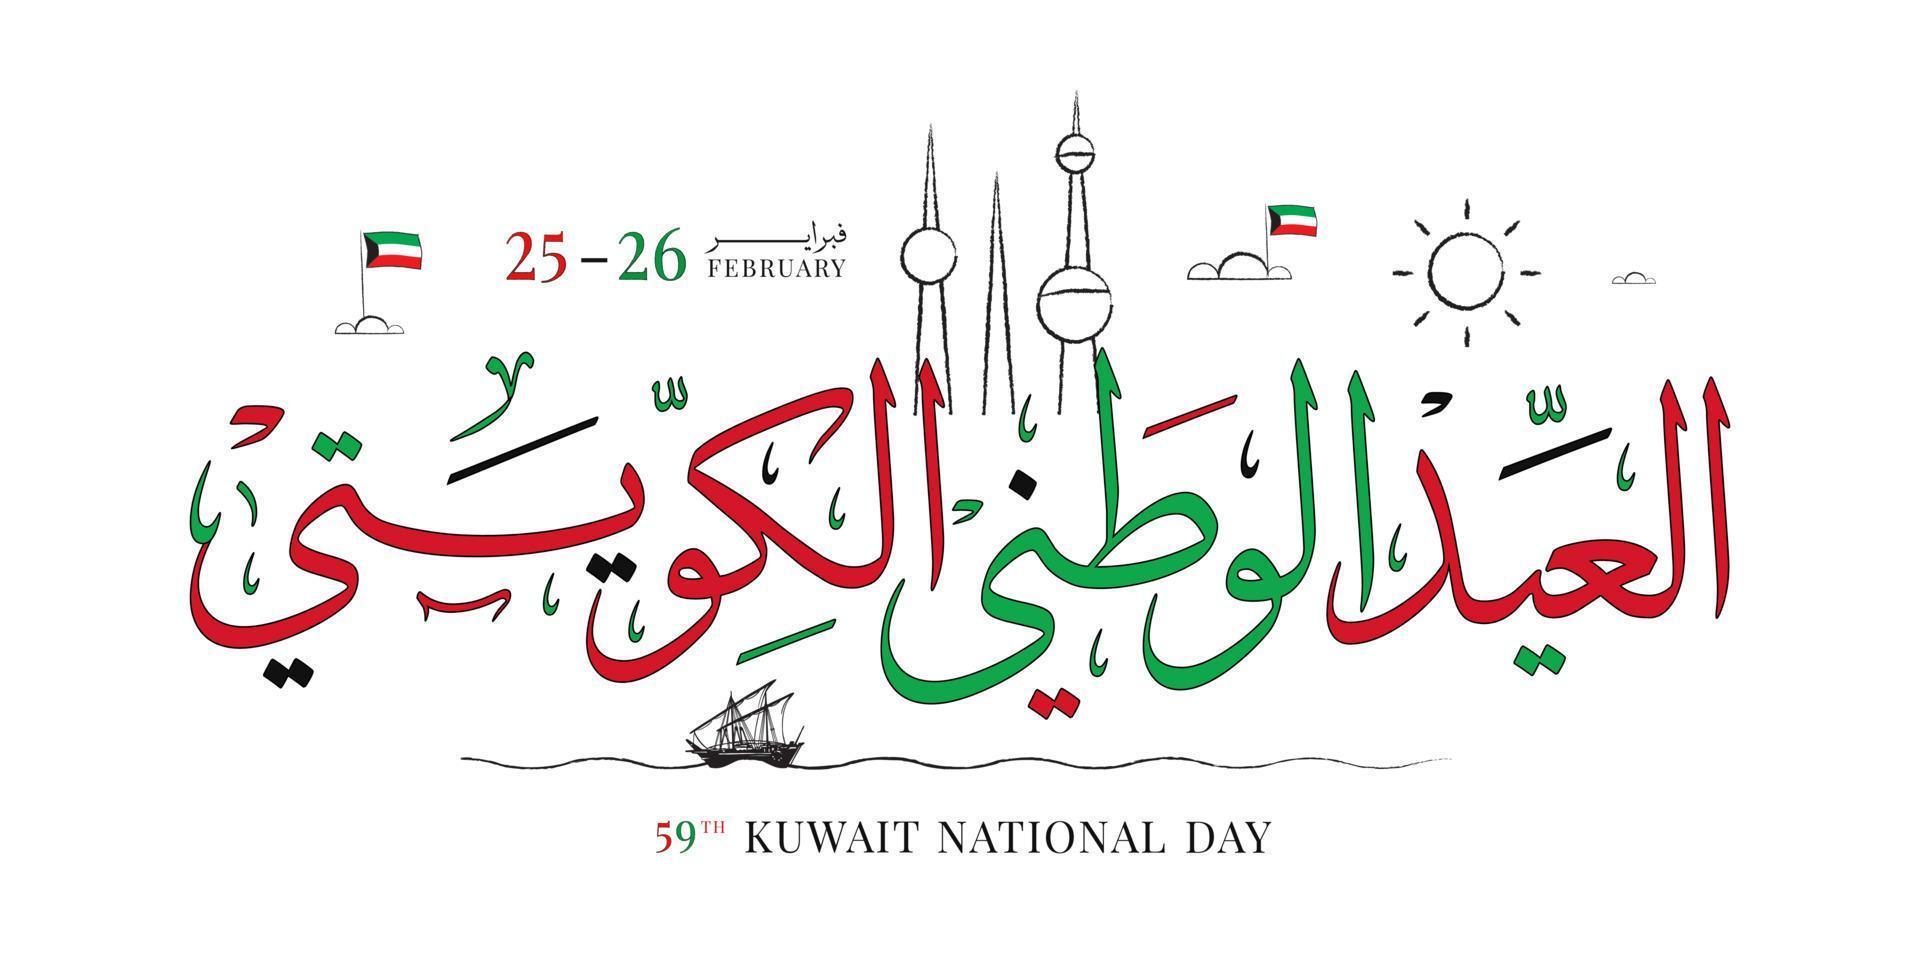 Kuwait national day February 25 26, Kuwait independence day vector illustration